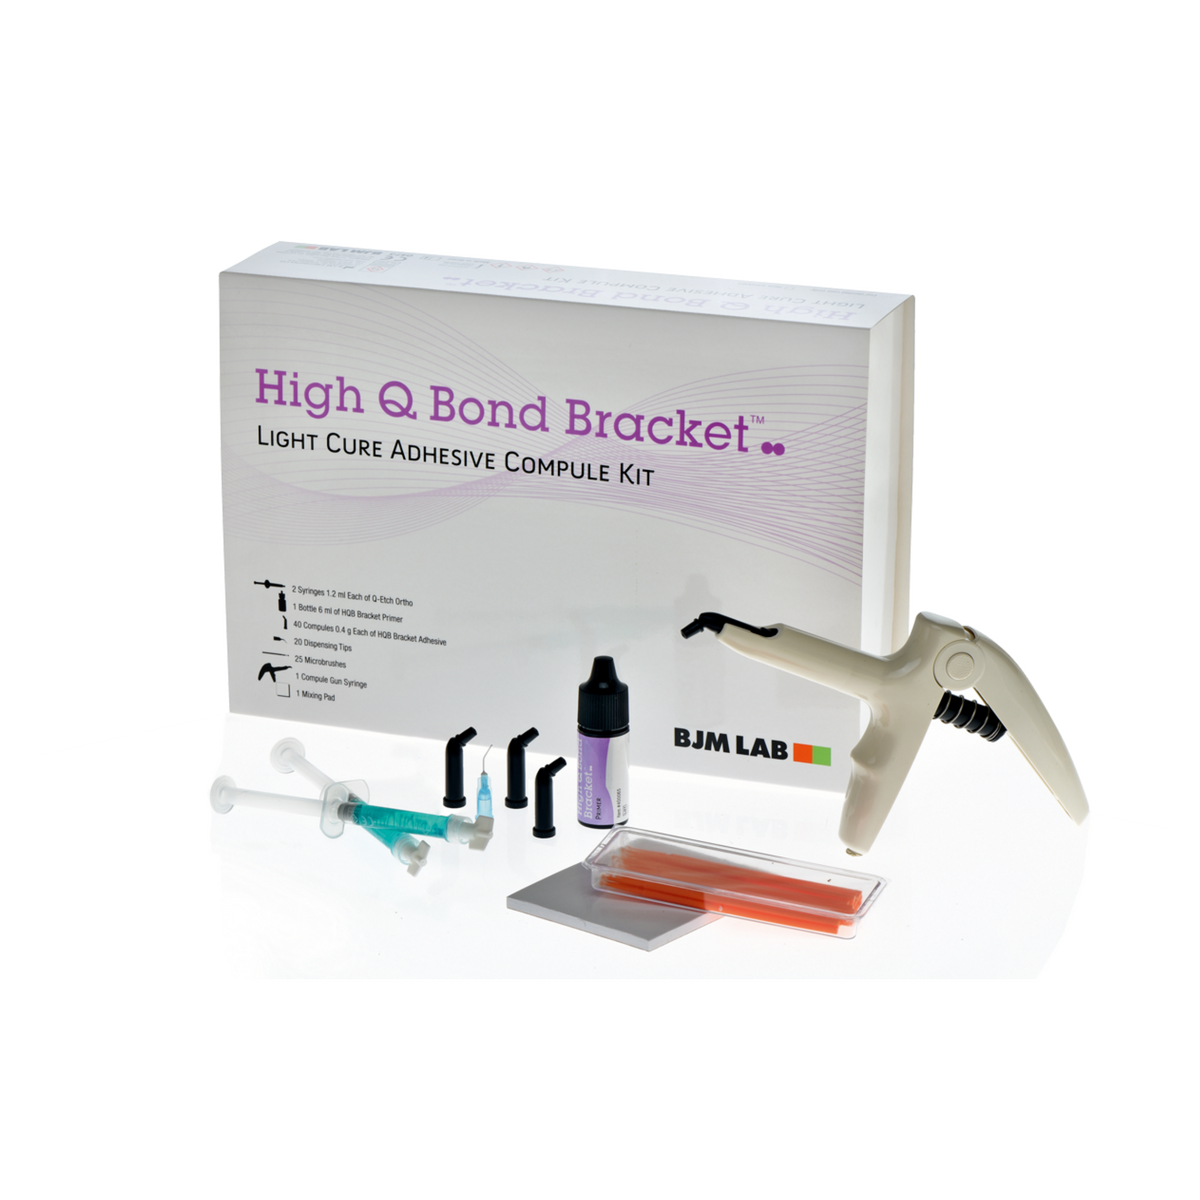 High q bond. High-q-Bond Light Cure Adhesive Bracket. High q Bond Light Cure Adhesive Bracket Kit. Цемент Хай-q-Бонд Bracket Light Cure Adhesive Kit, набор, 400060, BJM. Адгезив для брекетов High-q-Bond.